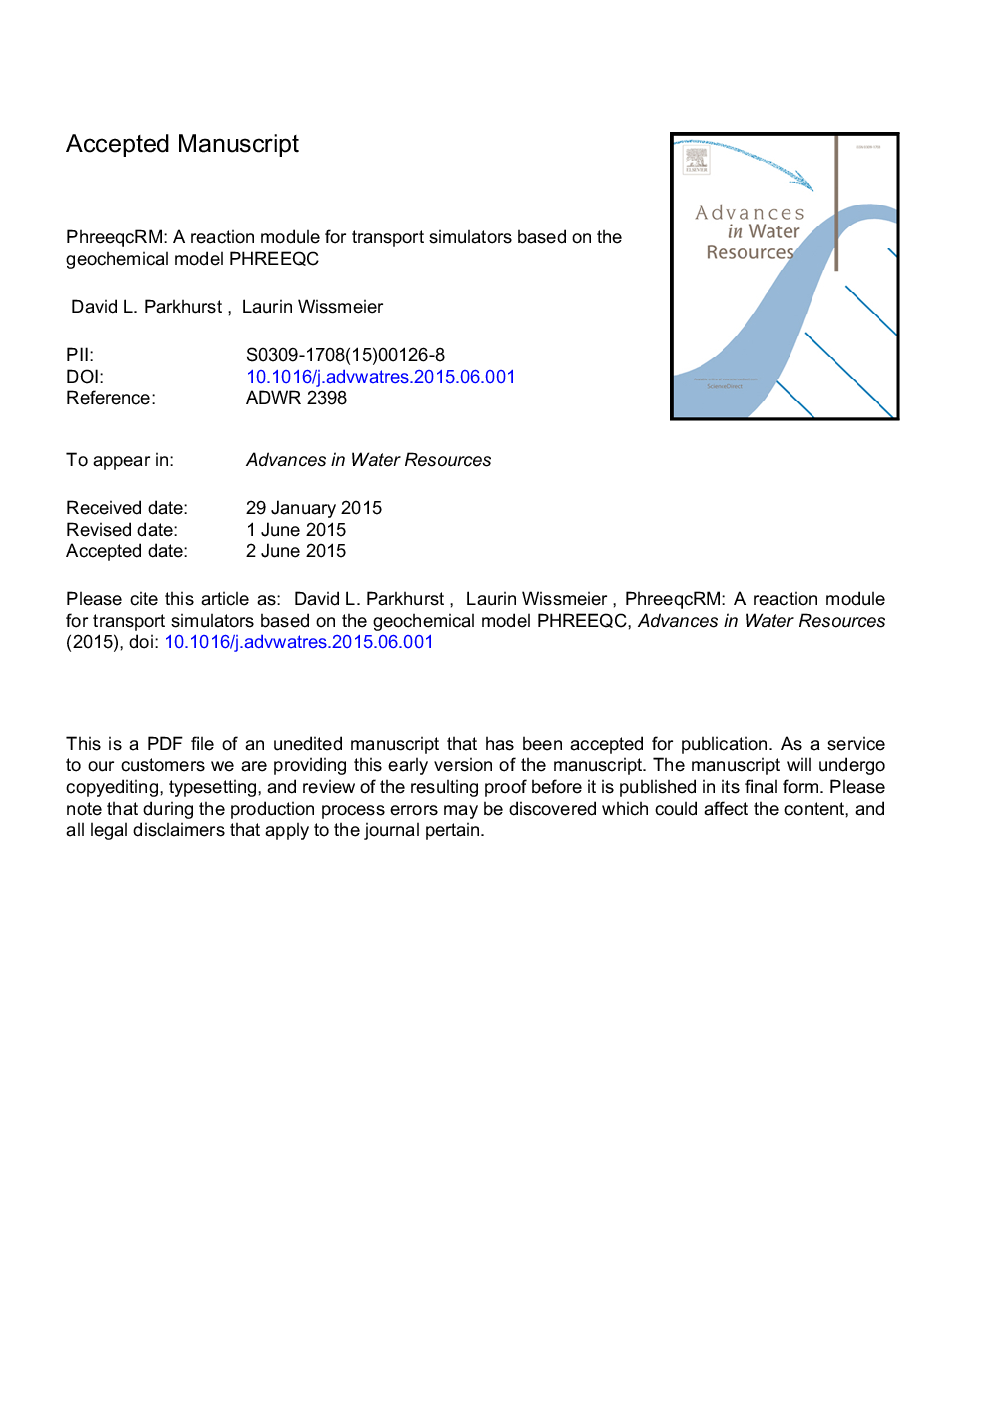 PhreeqcRM: A reaction module for transport simulators based on the geochemical model PHREEQC